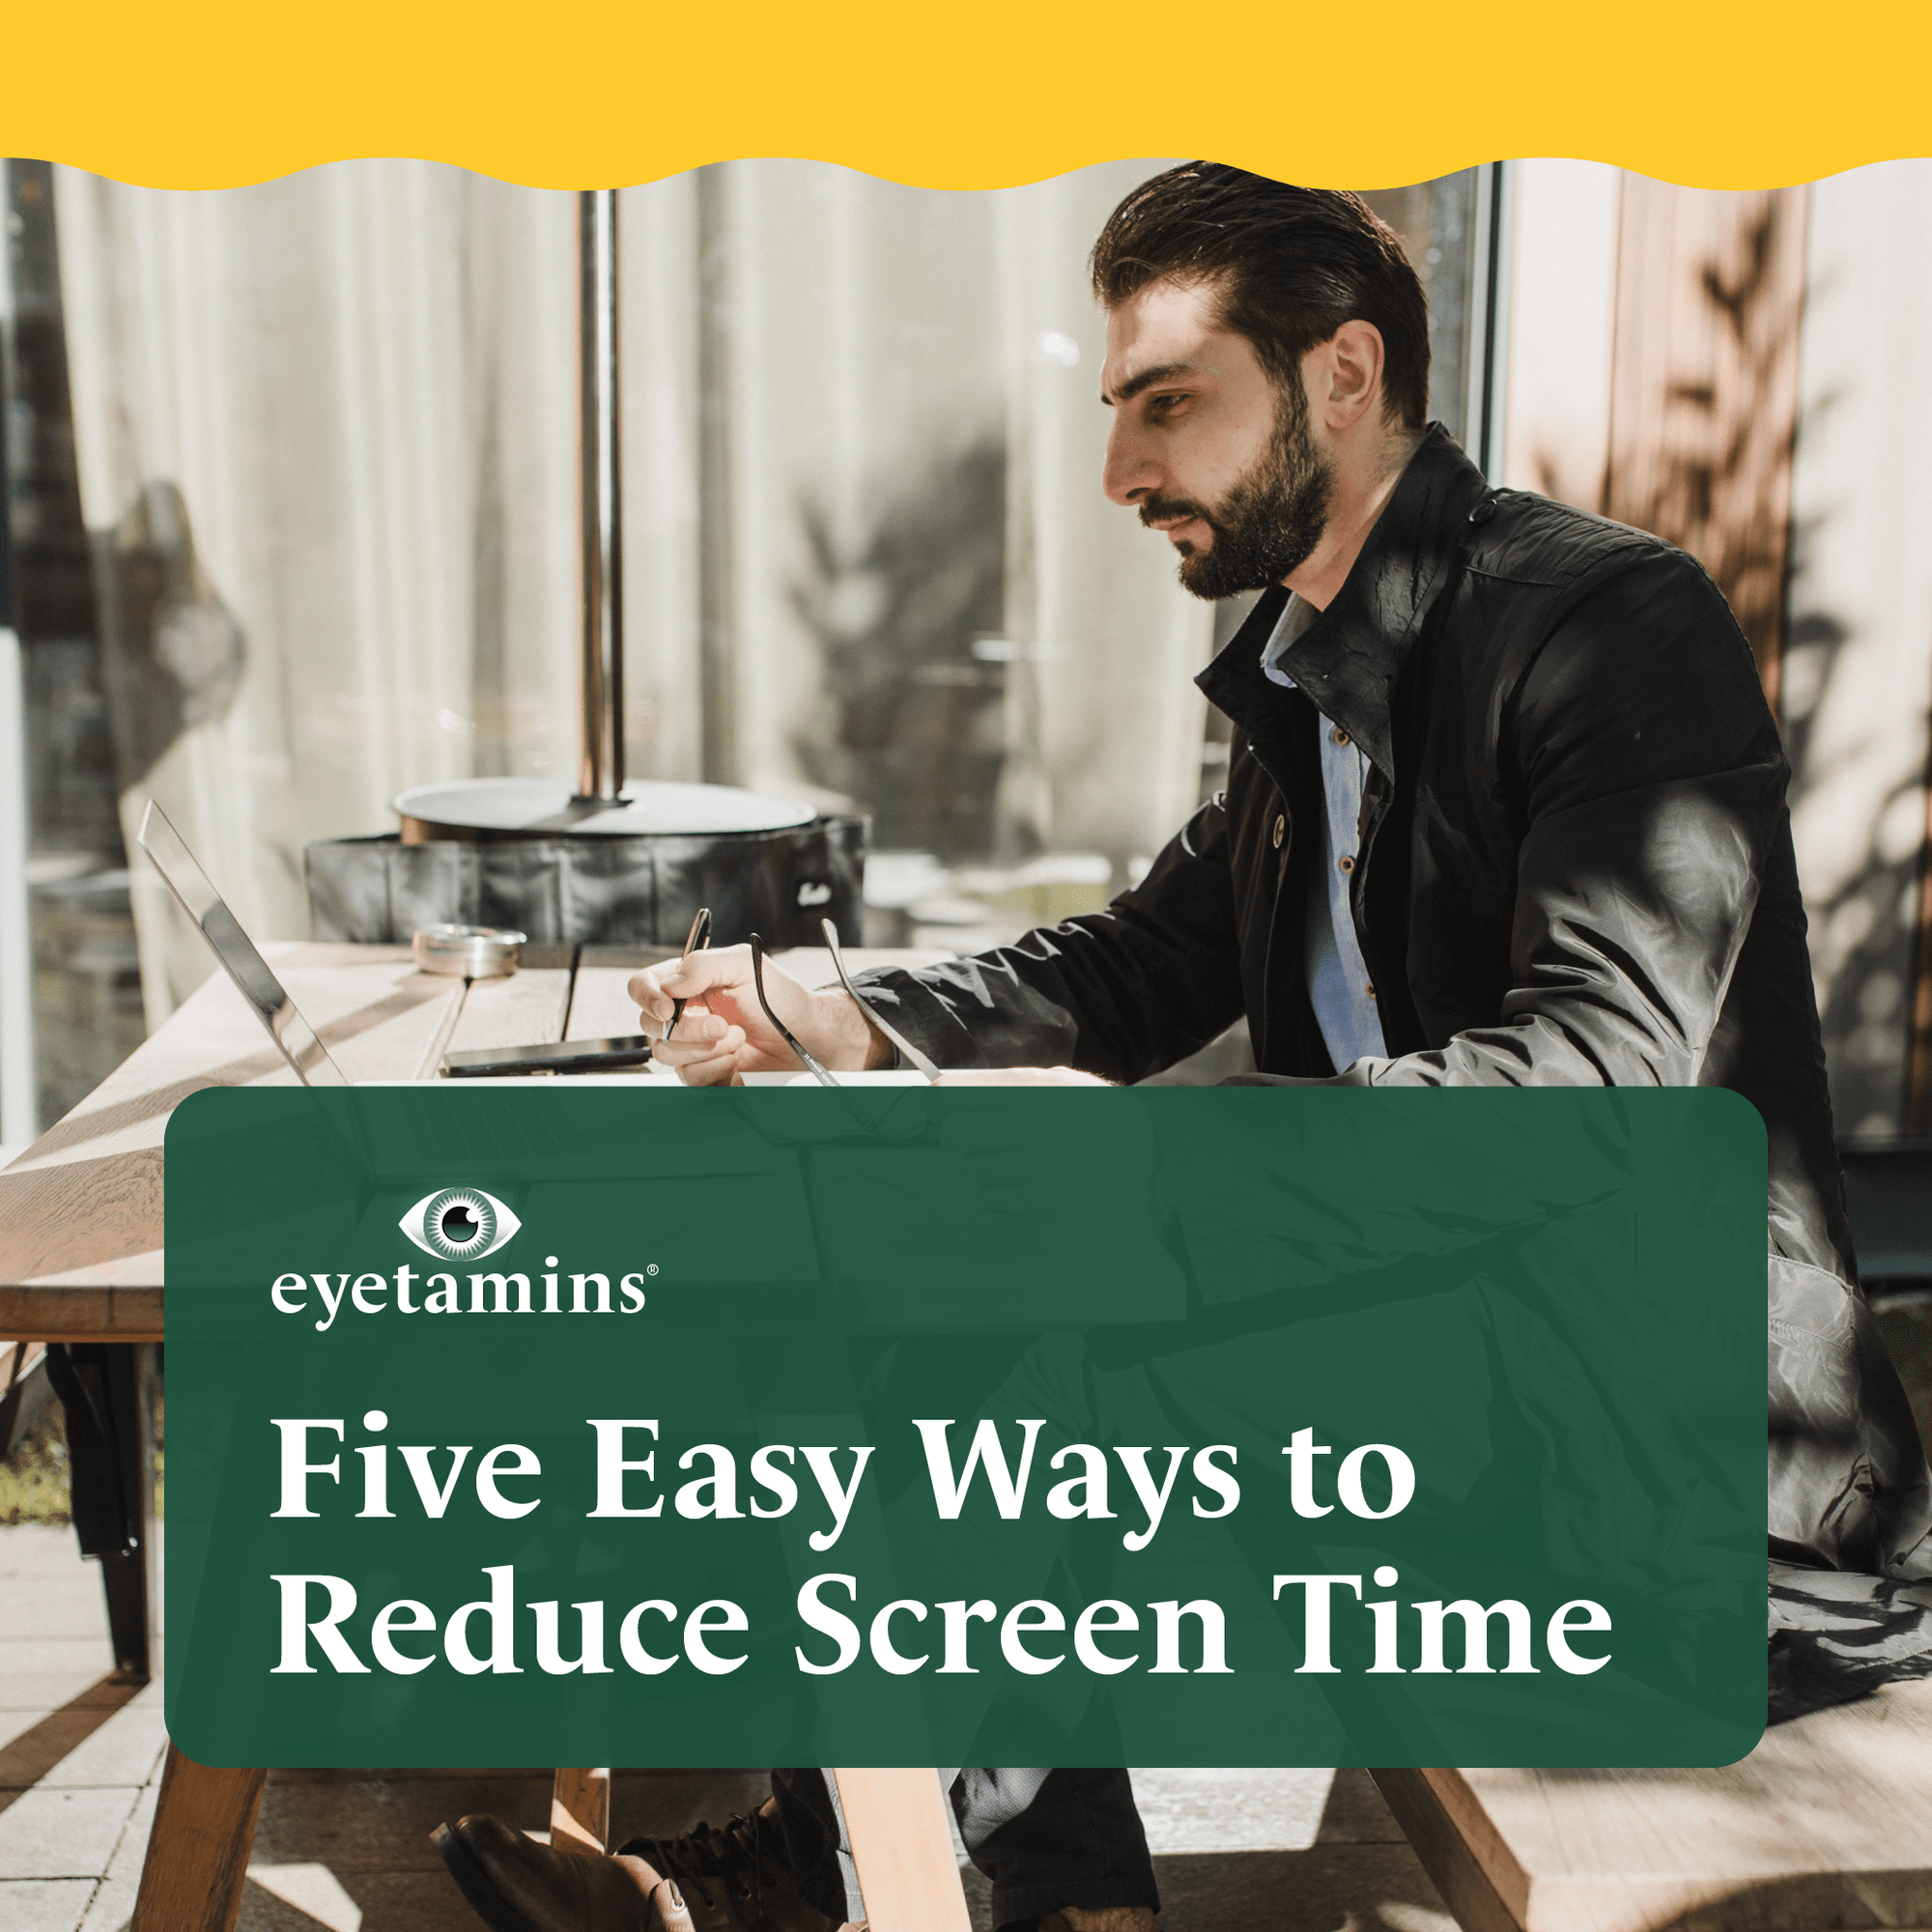 Eyetamins - Five Easy Ways to Reduce Screen Time